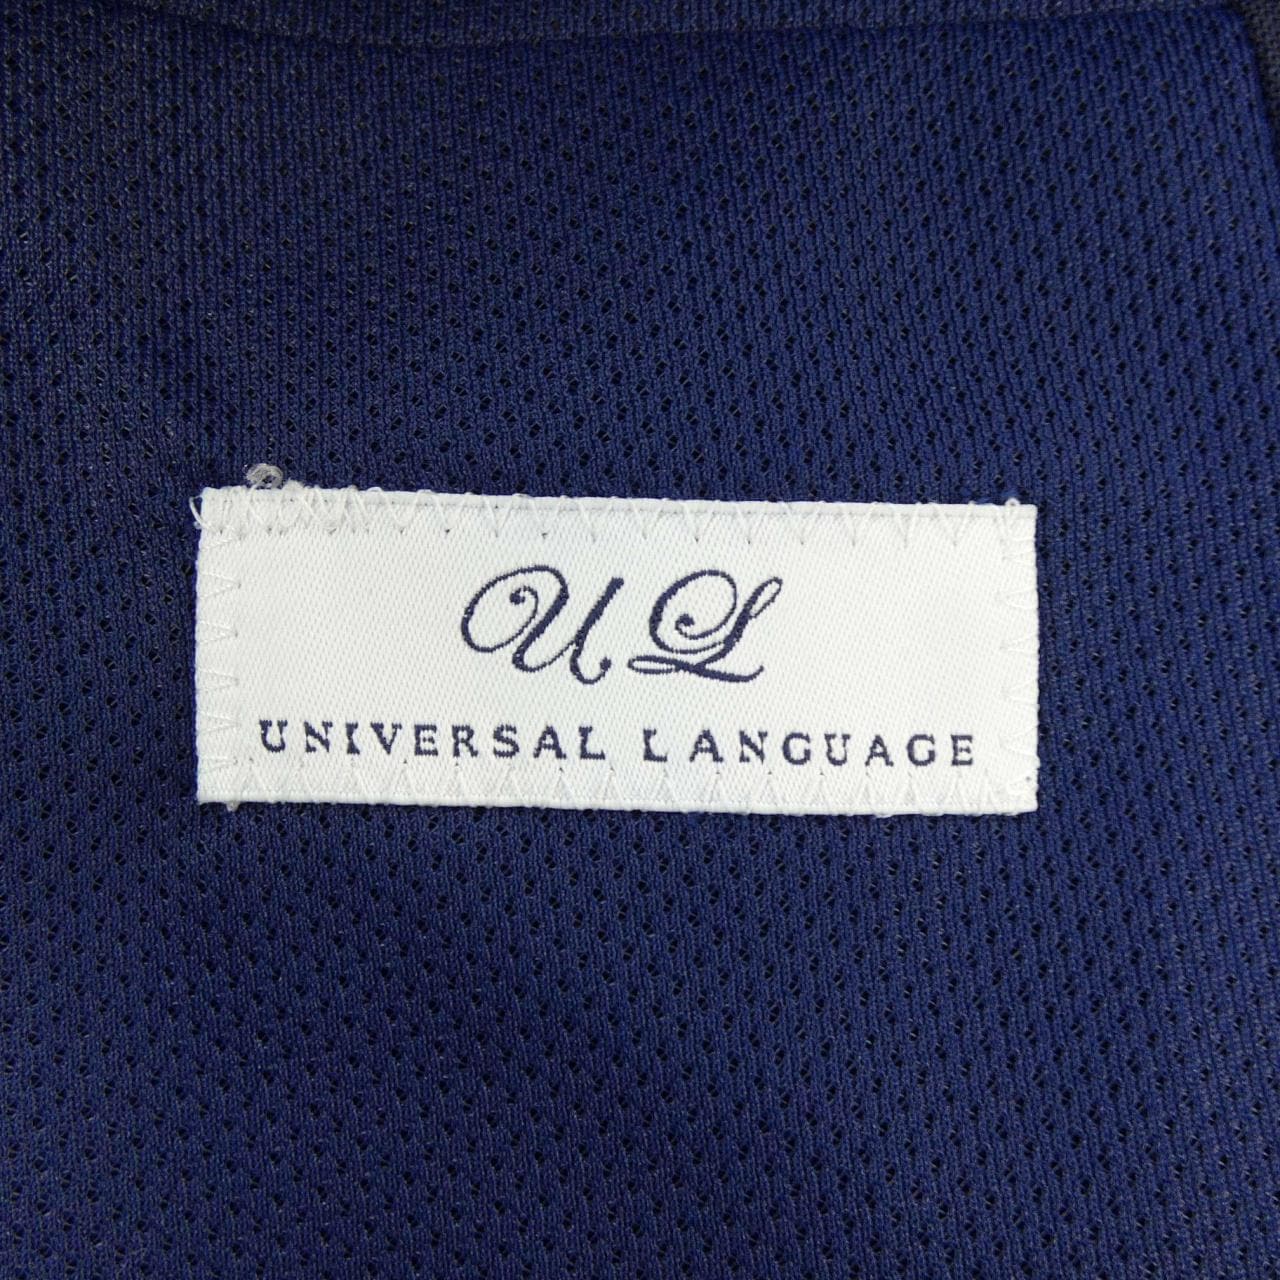 UNIVERSAL LANGUAGE ジャケット